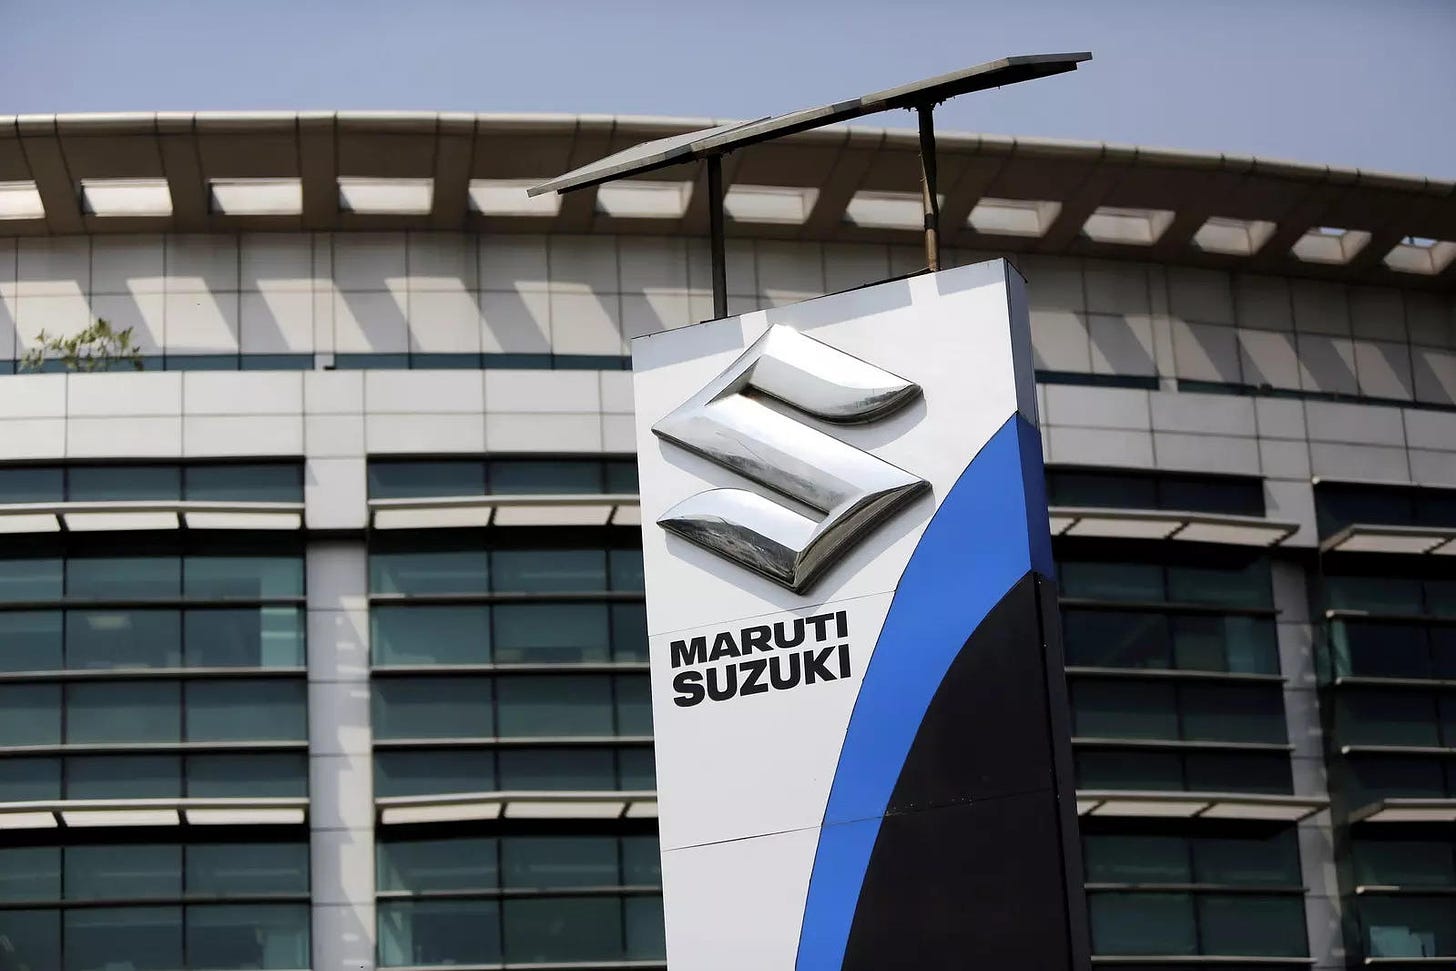 maruti suzuki price hike: Maruti Suzuki announces 1.9% price hike for  select models from today, Auto News, ET Auto